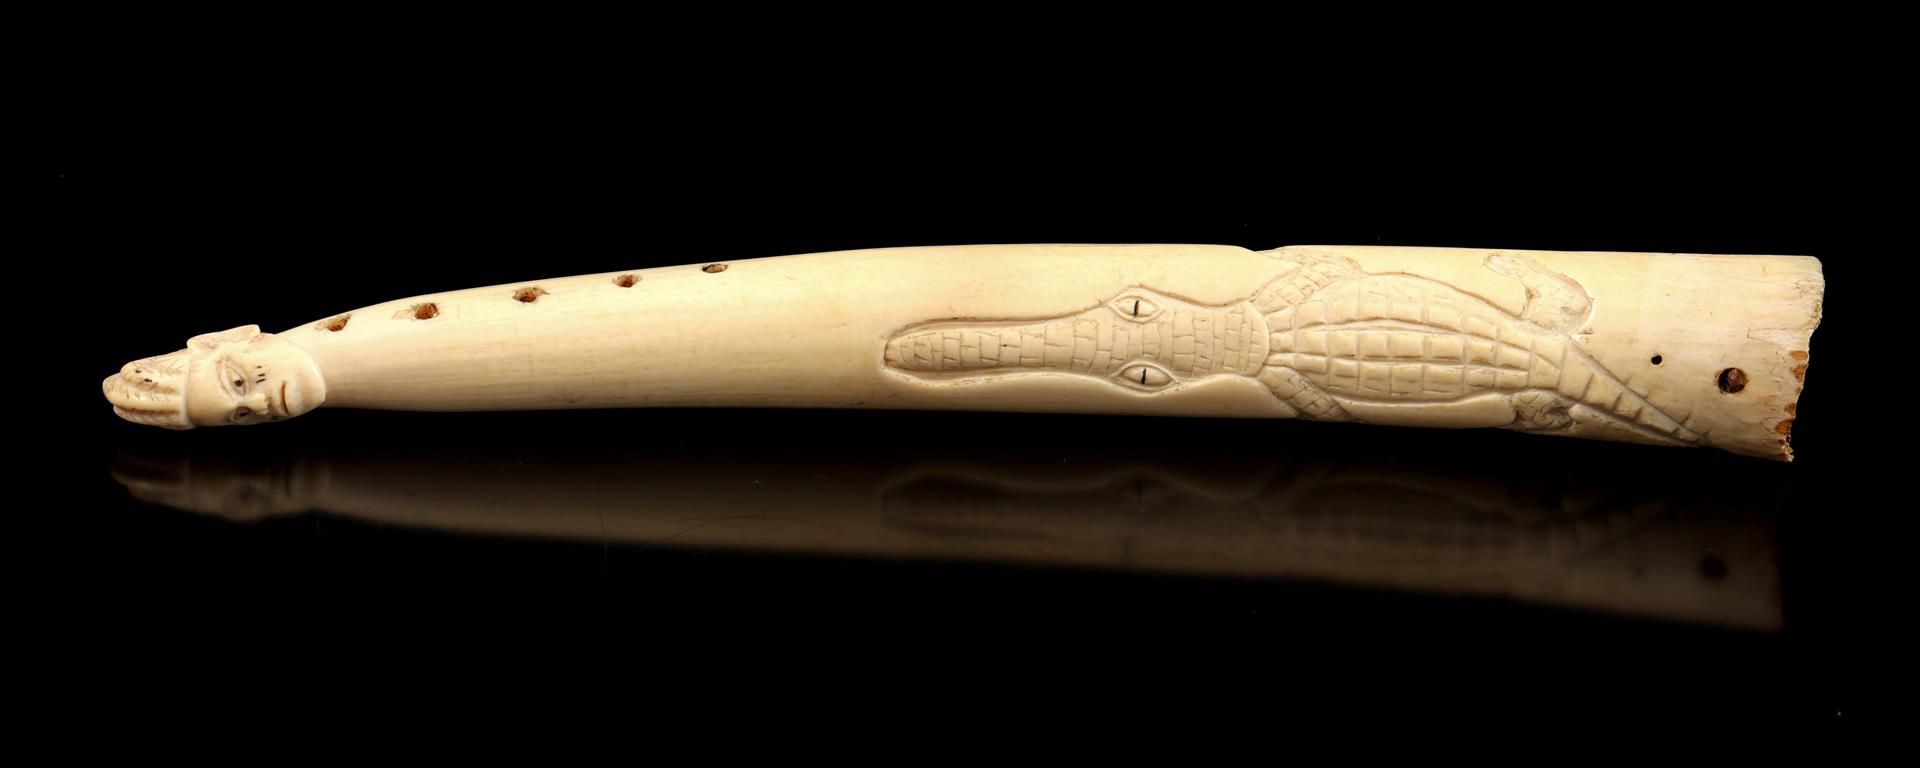 Ivory ceremonial flute, Africa around 1930, 29.5 cm, 214 grams. With certificate. - Bild 2 aus 3